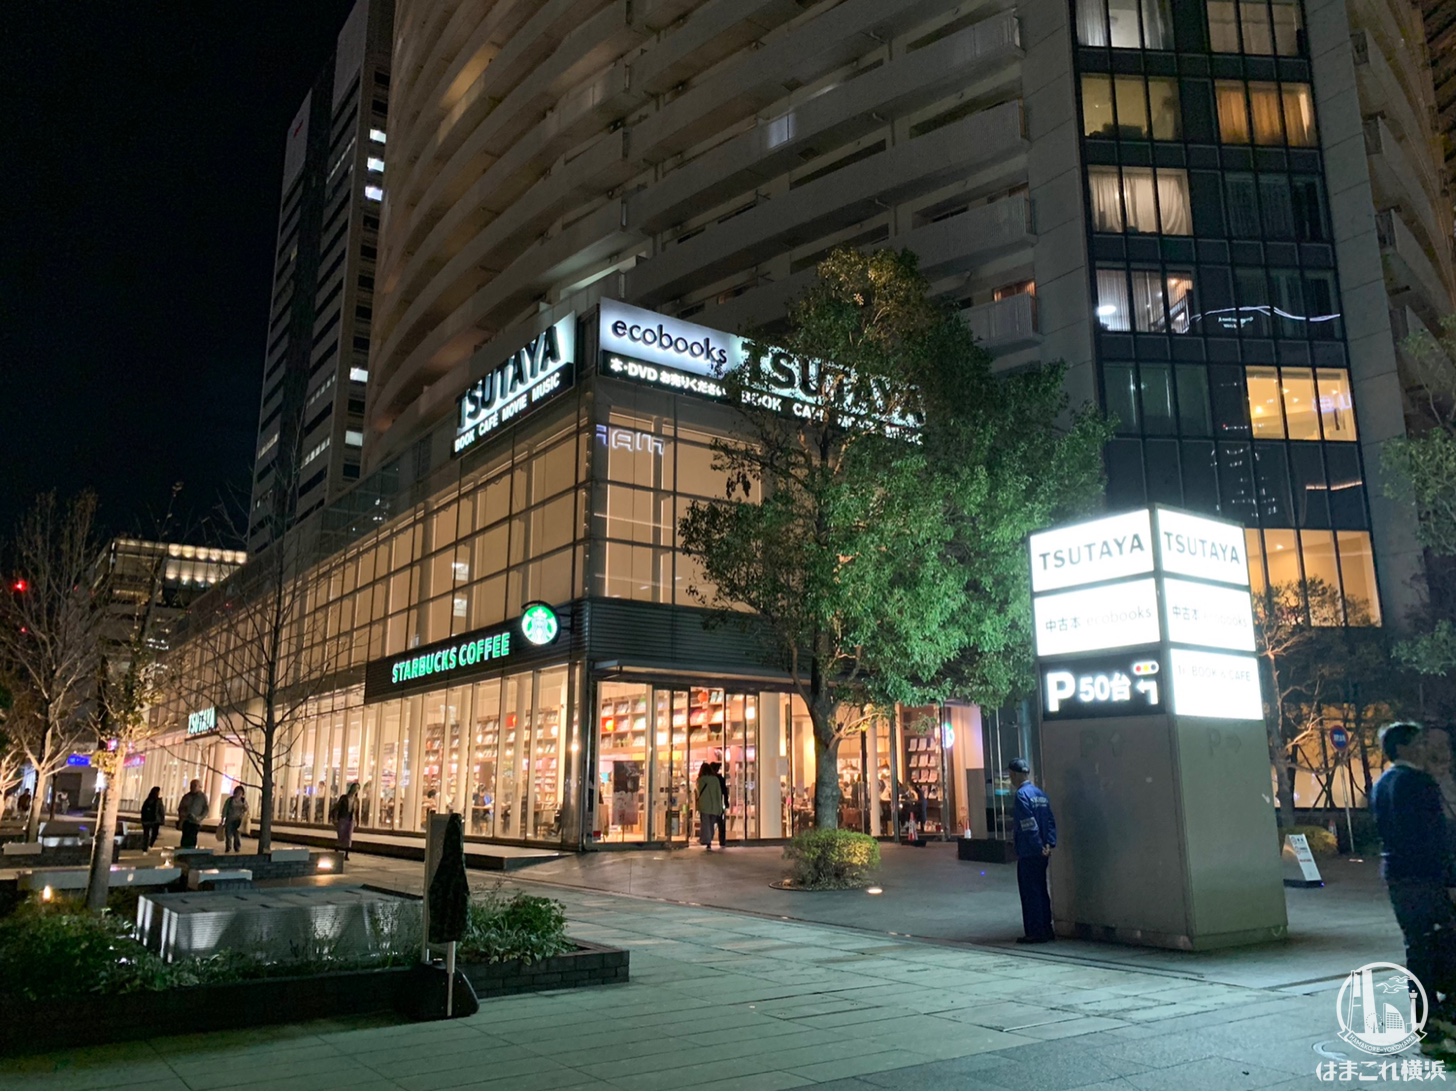 TSUTAYA 横浜みなとみらい店、2階部分の営業を10月31日に終了